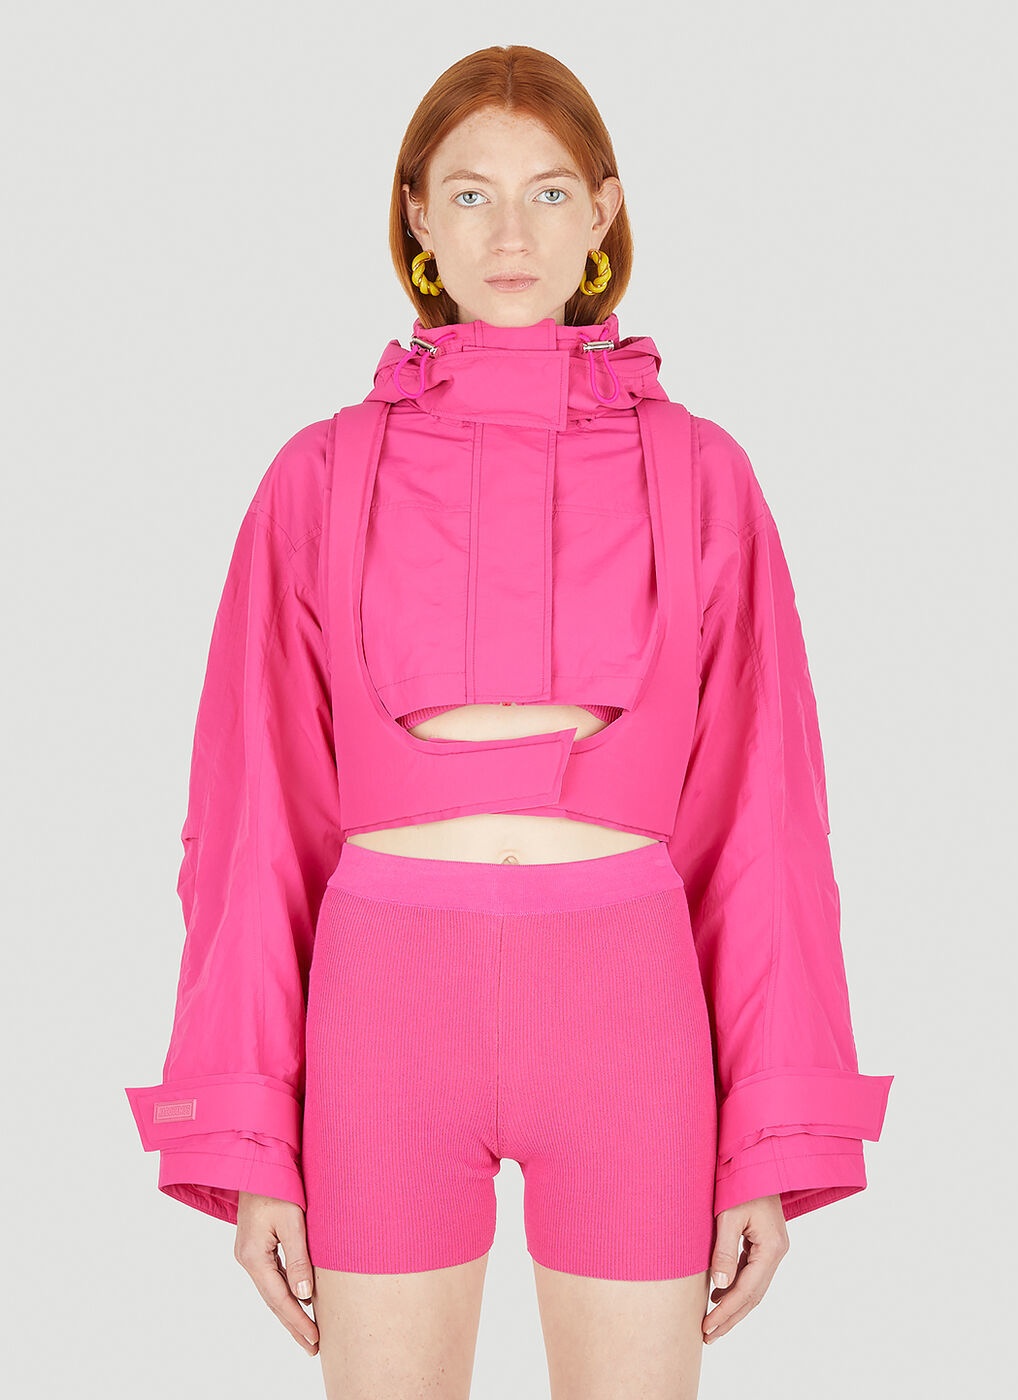 La Parka Fresa Cropped Jacket in Pink Jacquemus